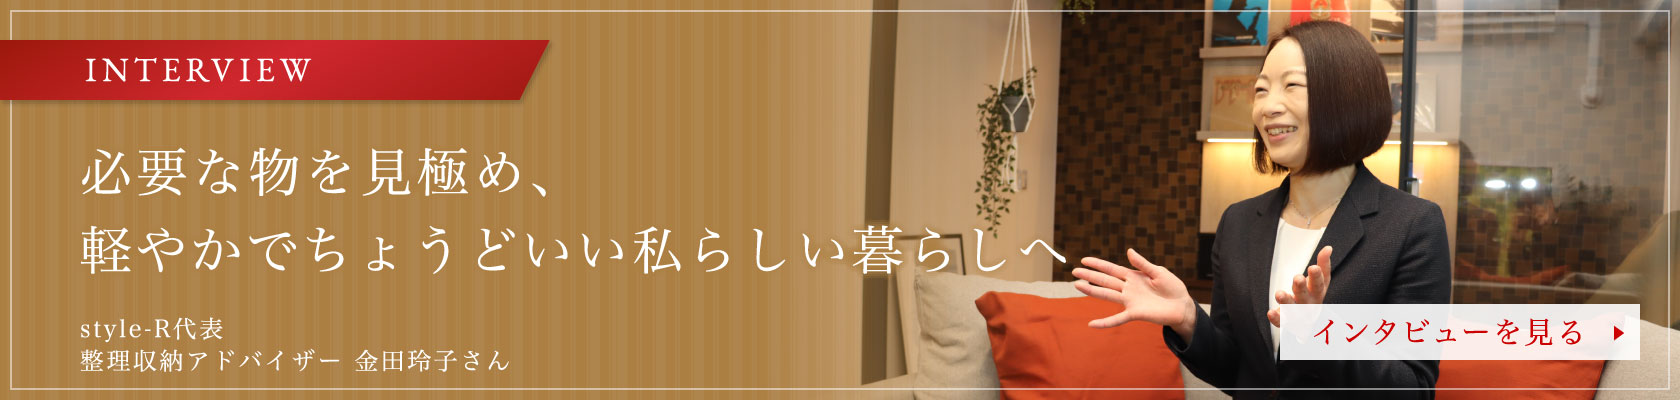 INTERVIEW
「必要な物を見極め、軽やかでちょうどいい私らしい暮らしへ」
style-R代表 整理収納アドバイザー 金田玲子さん